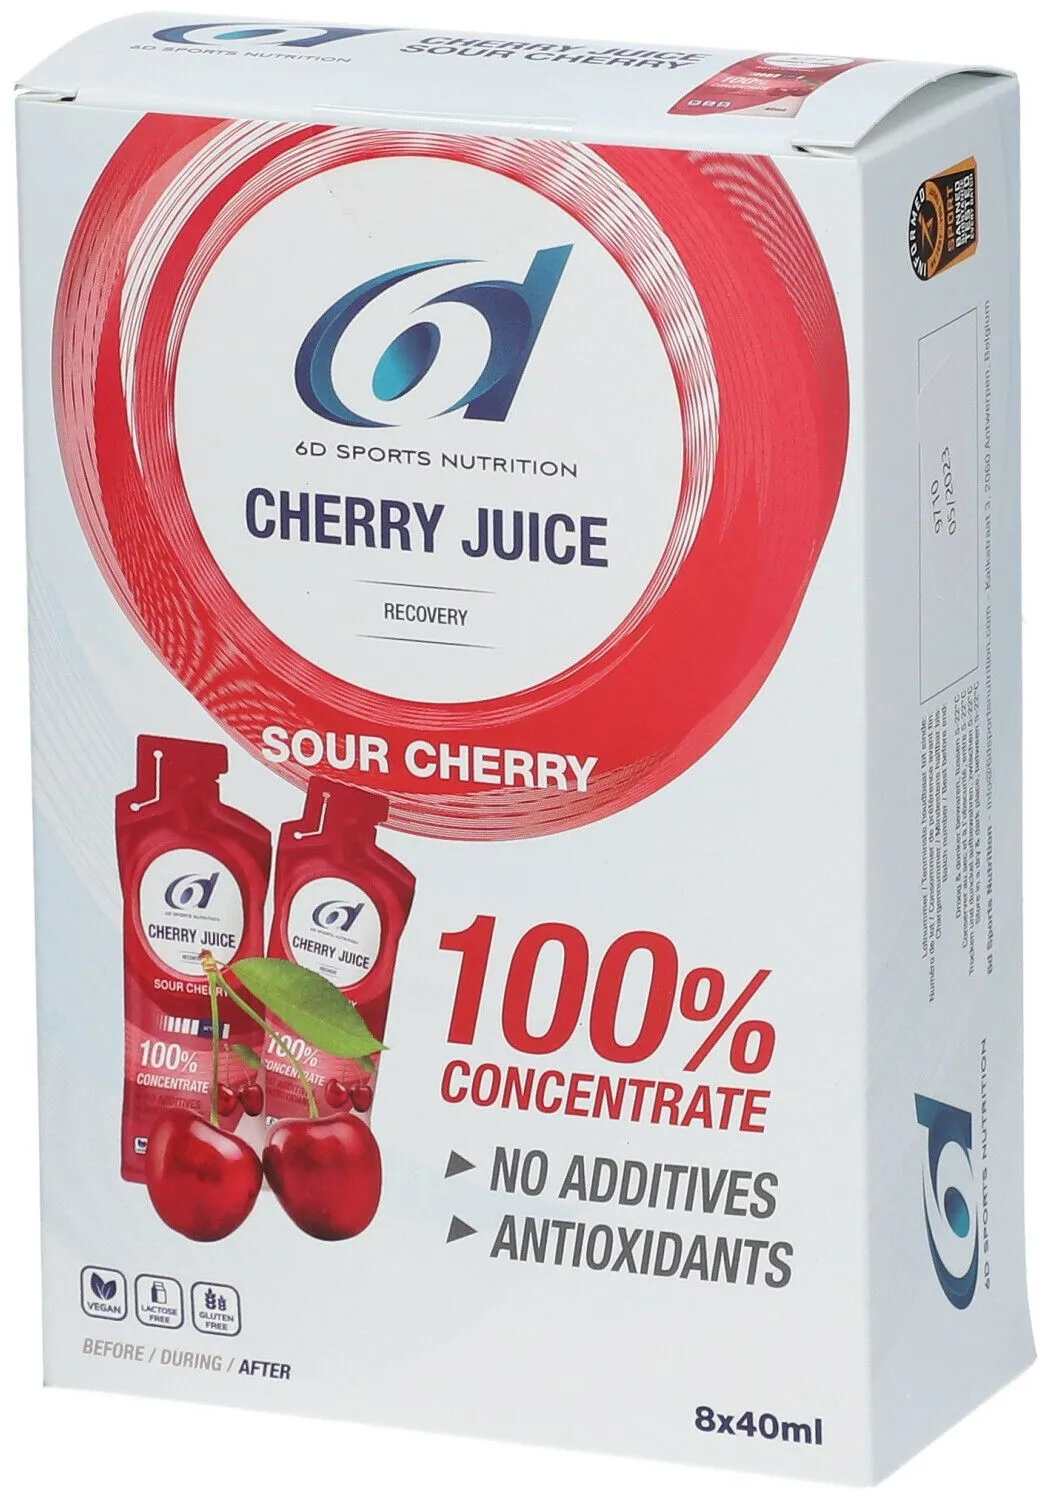 6D Sports Nutrition Cherry Juice